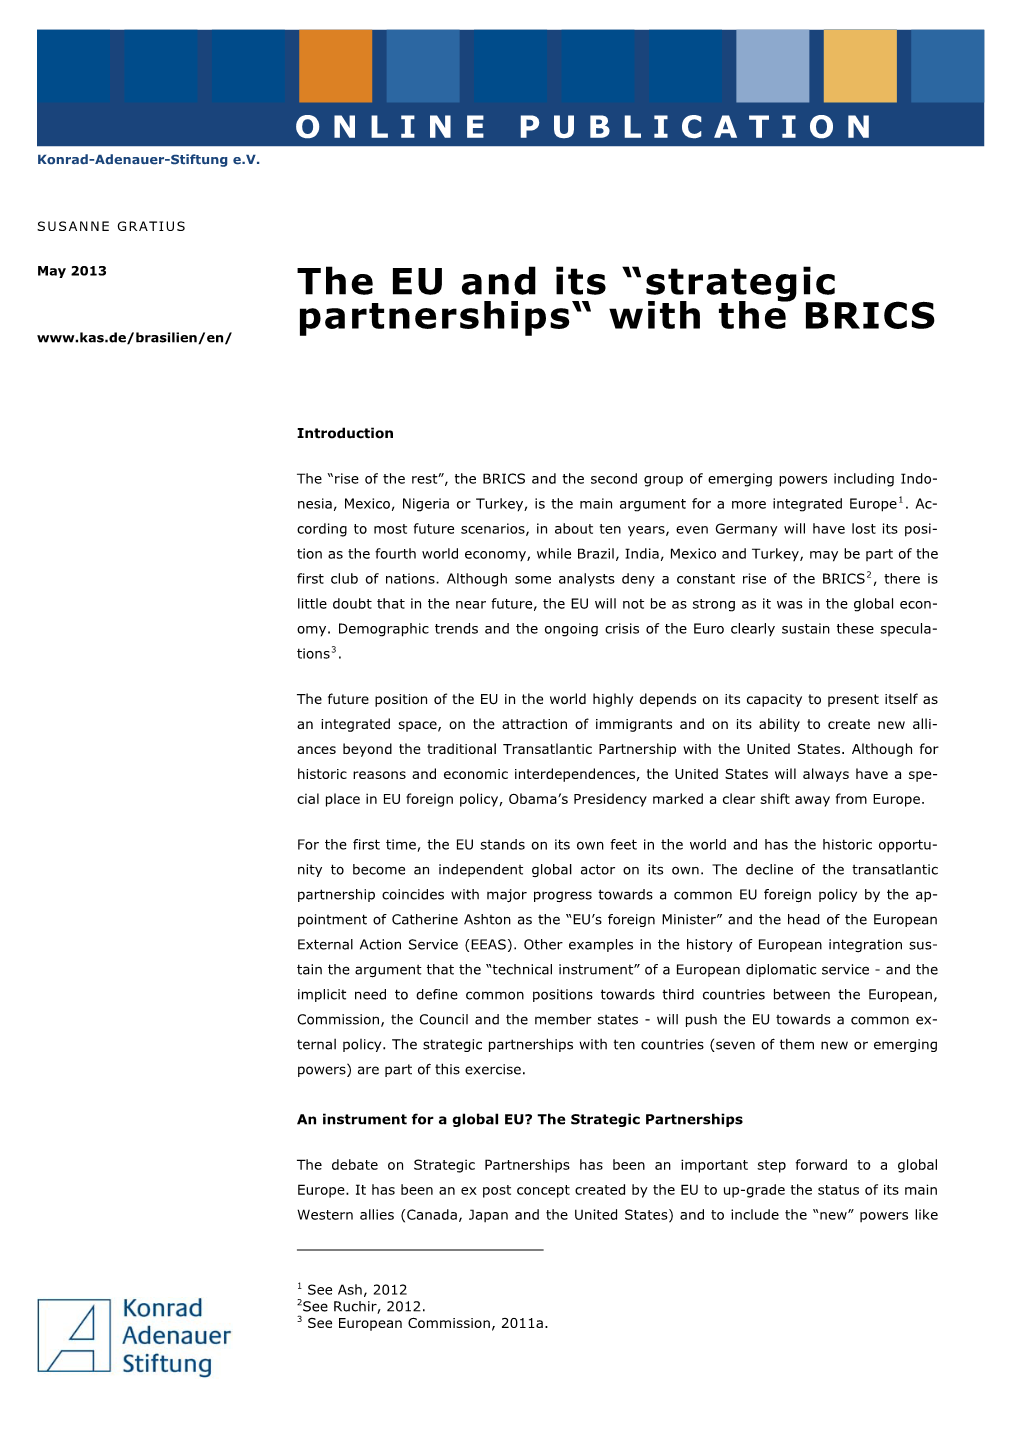 Strategic Partnerships“ with the BRICS